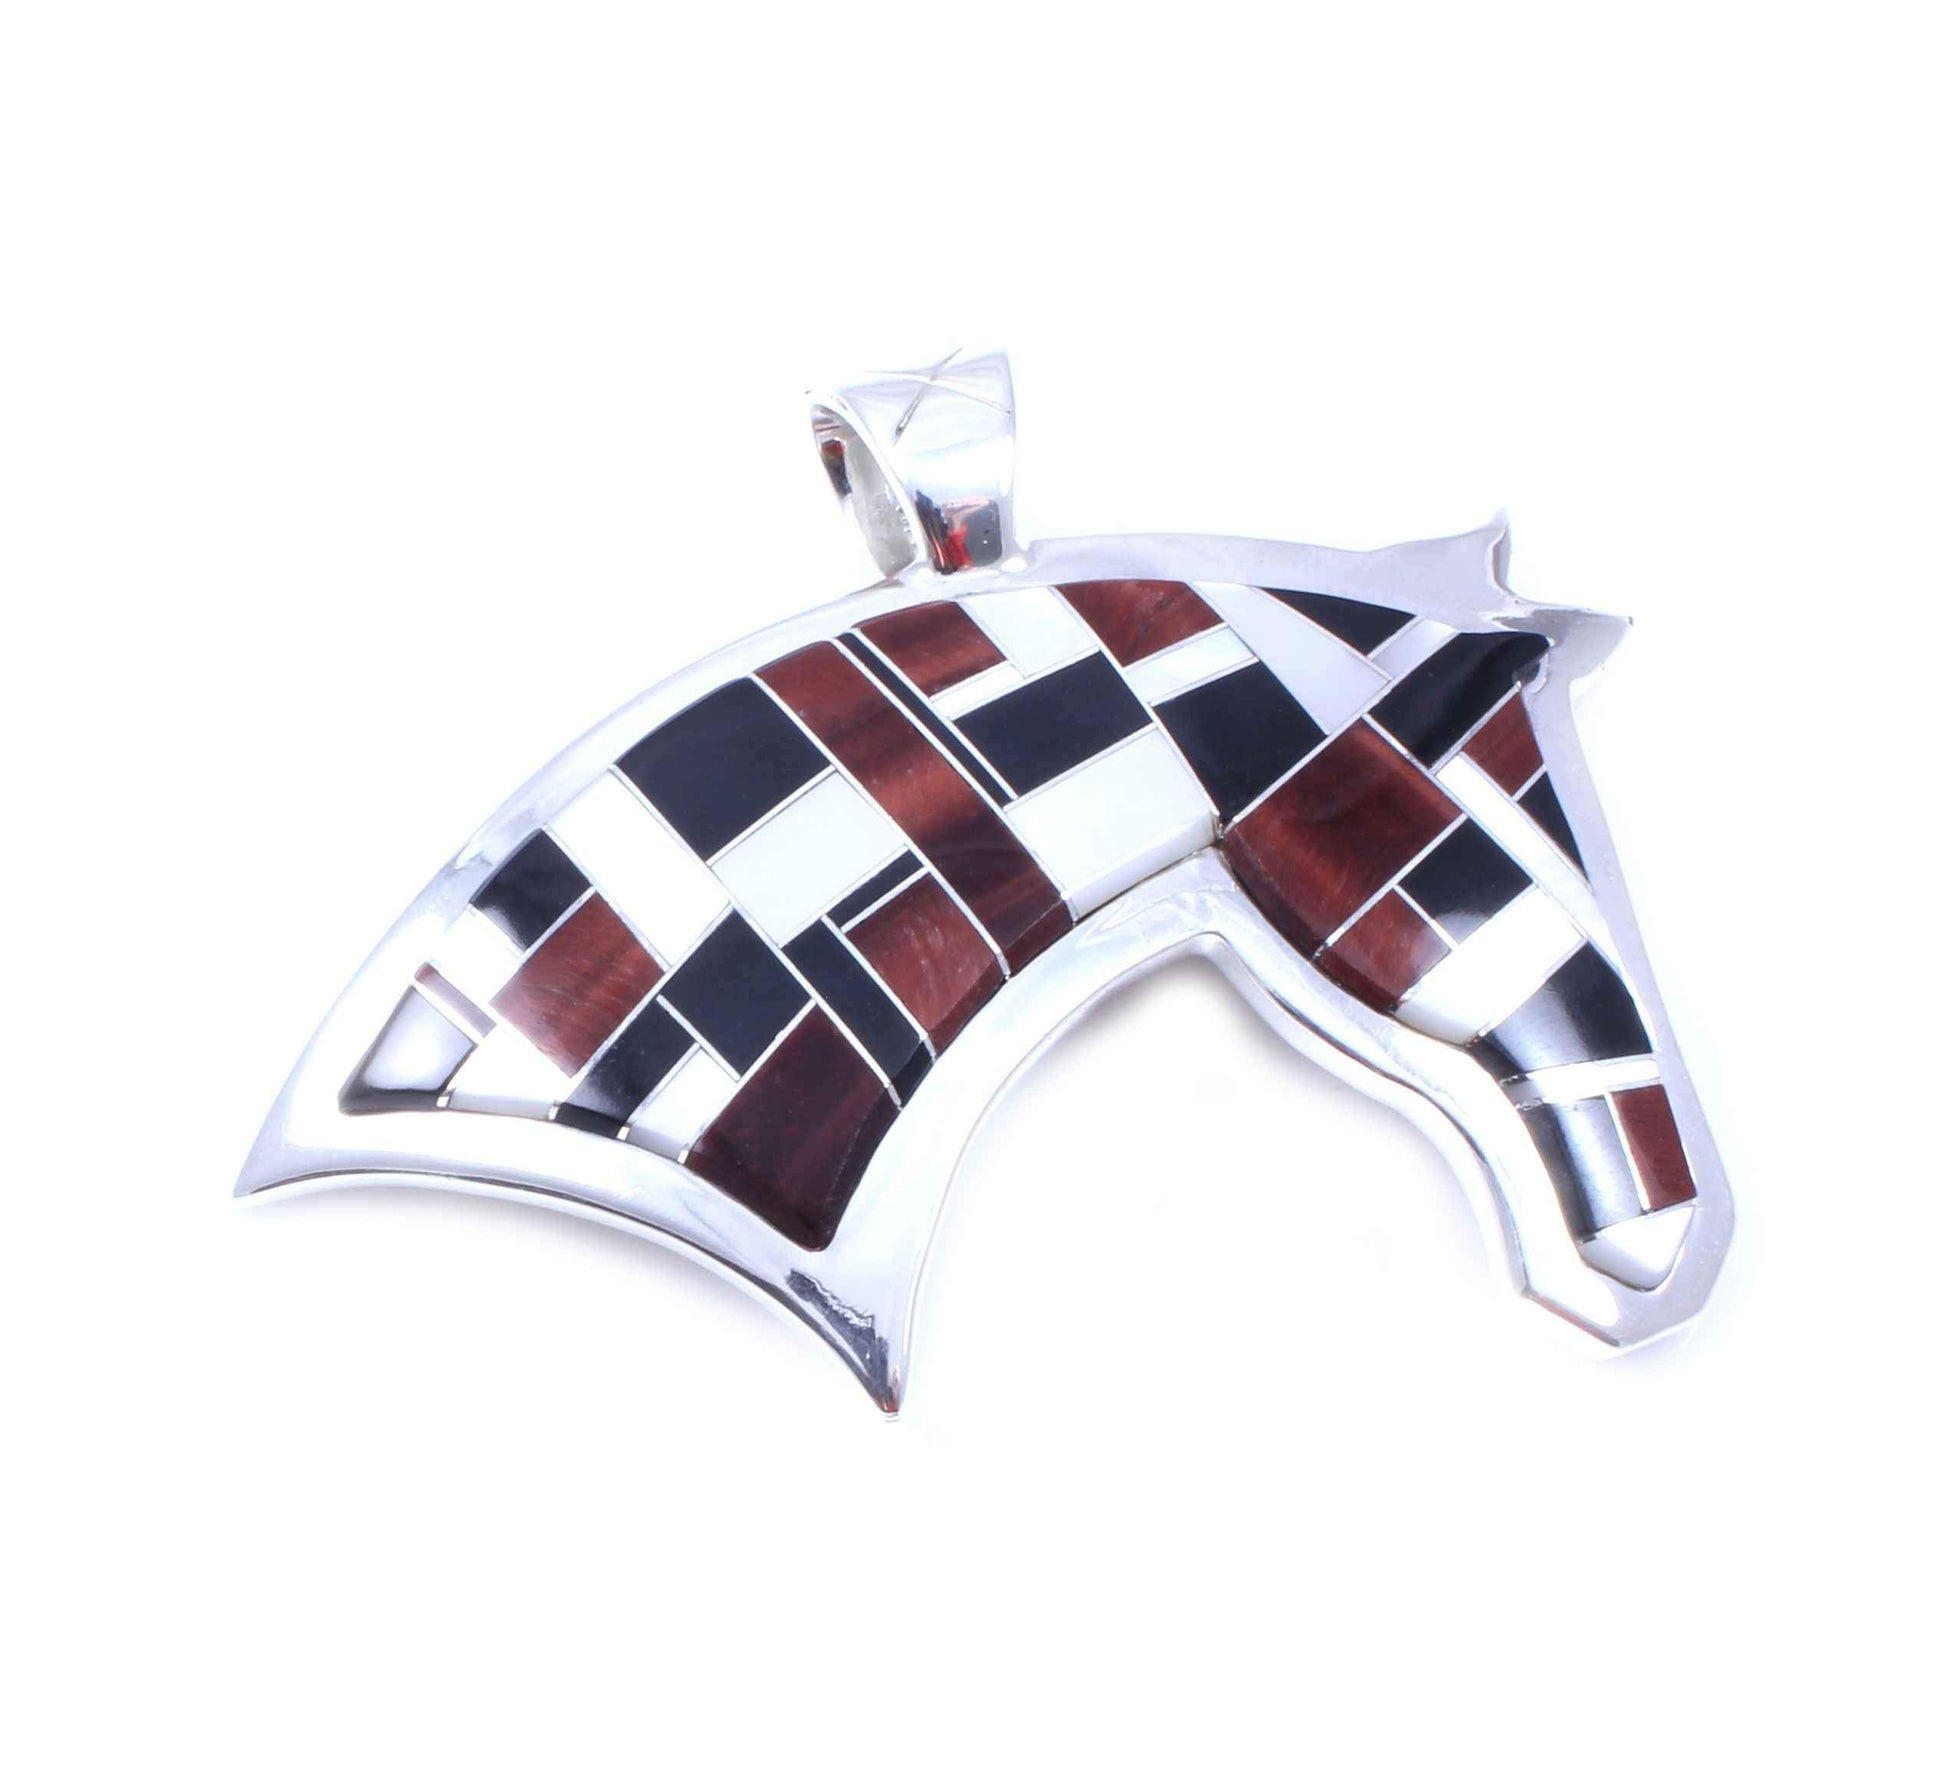 Ben Nighthorse-Horse Head Pendant-Sorrel Sky Gallery-Jewelry